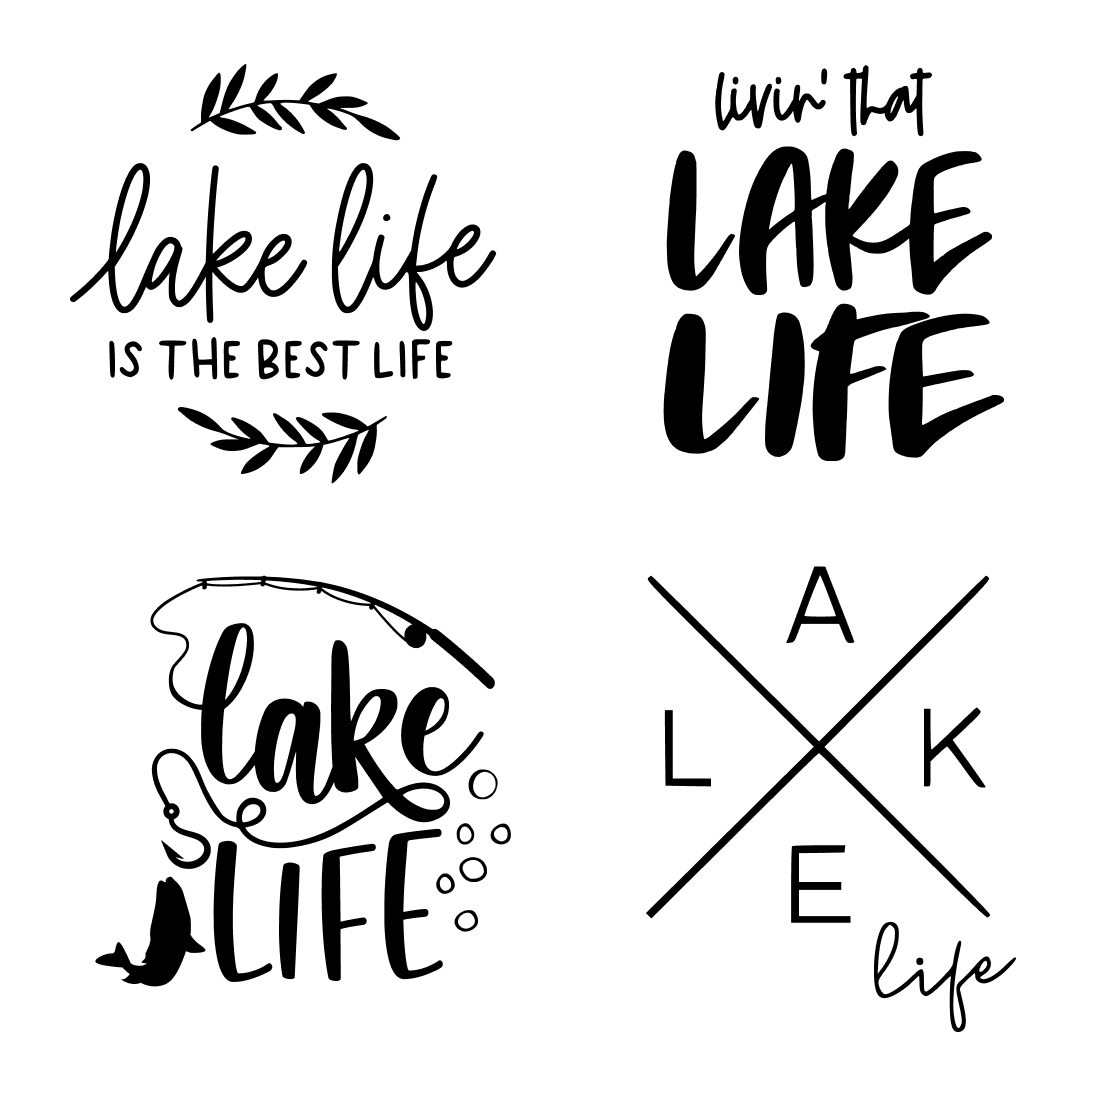 Lake Life SVG cover.